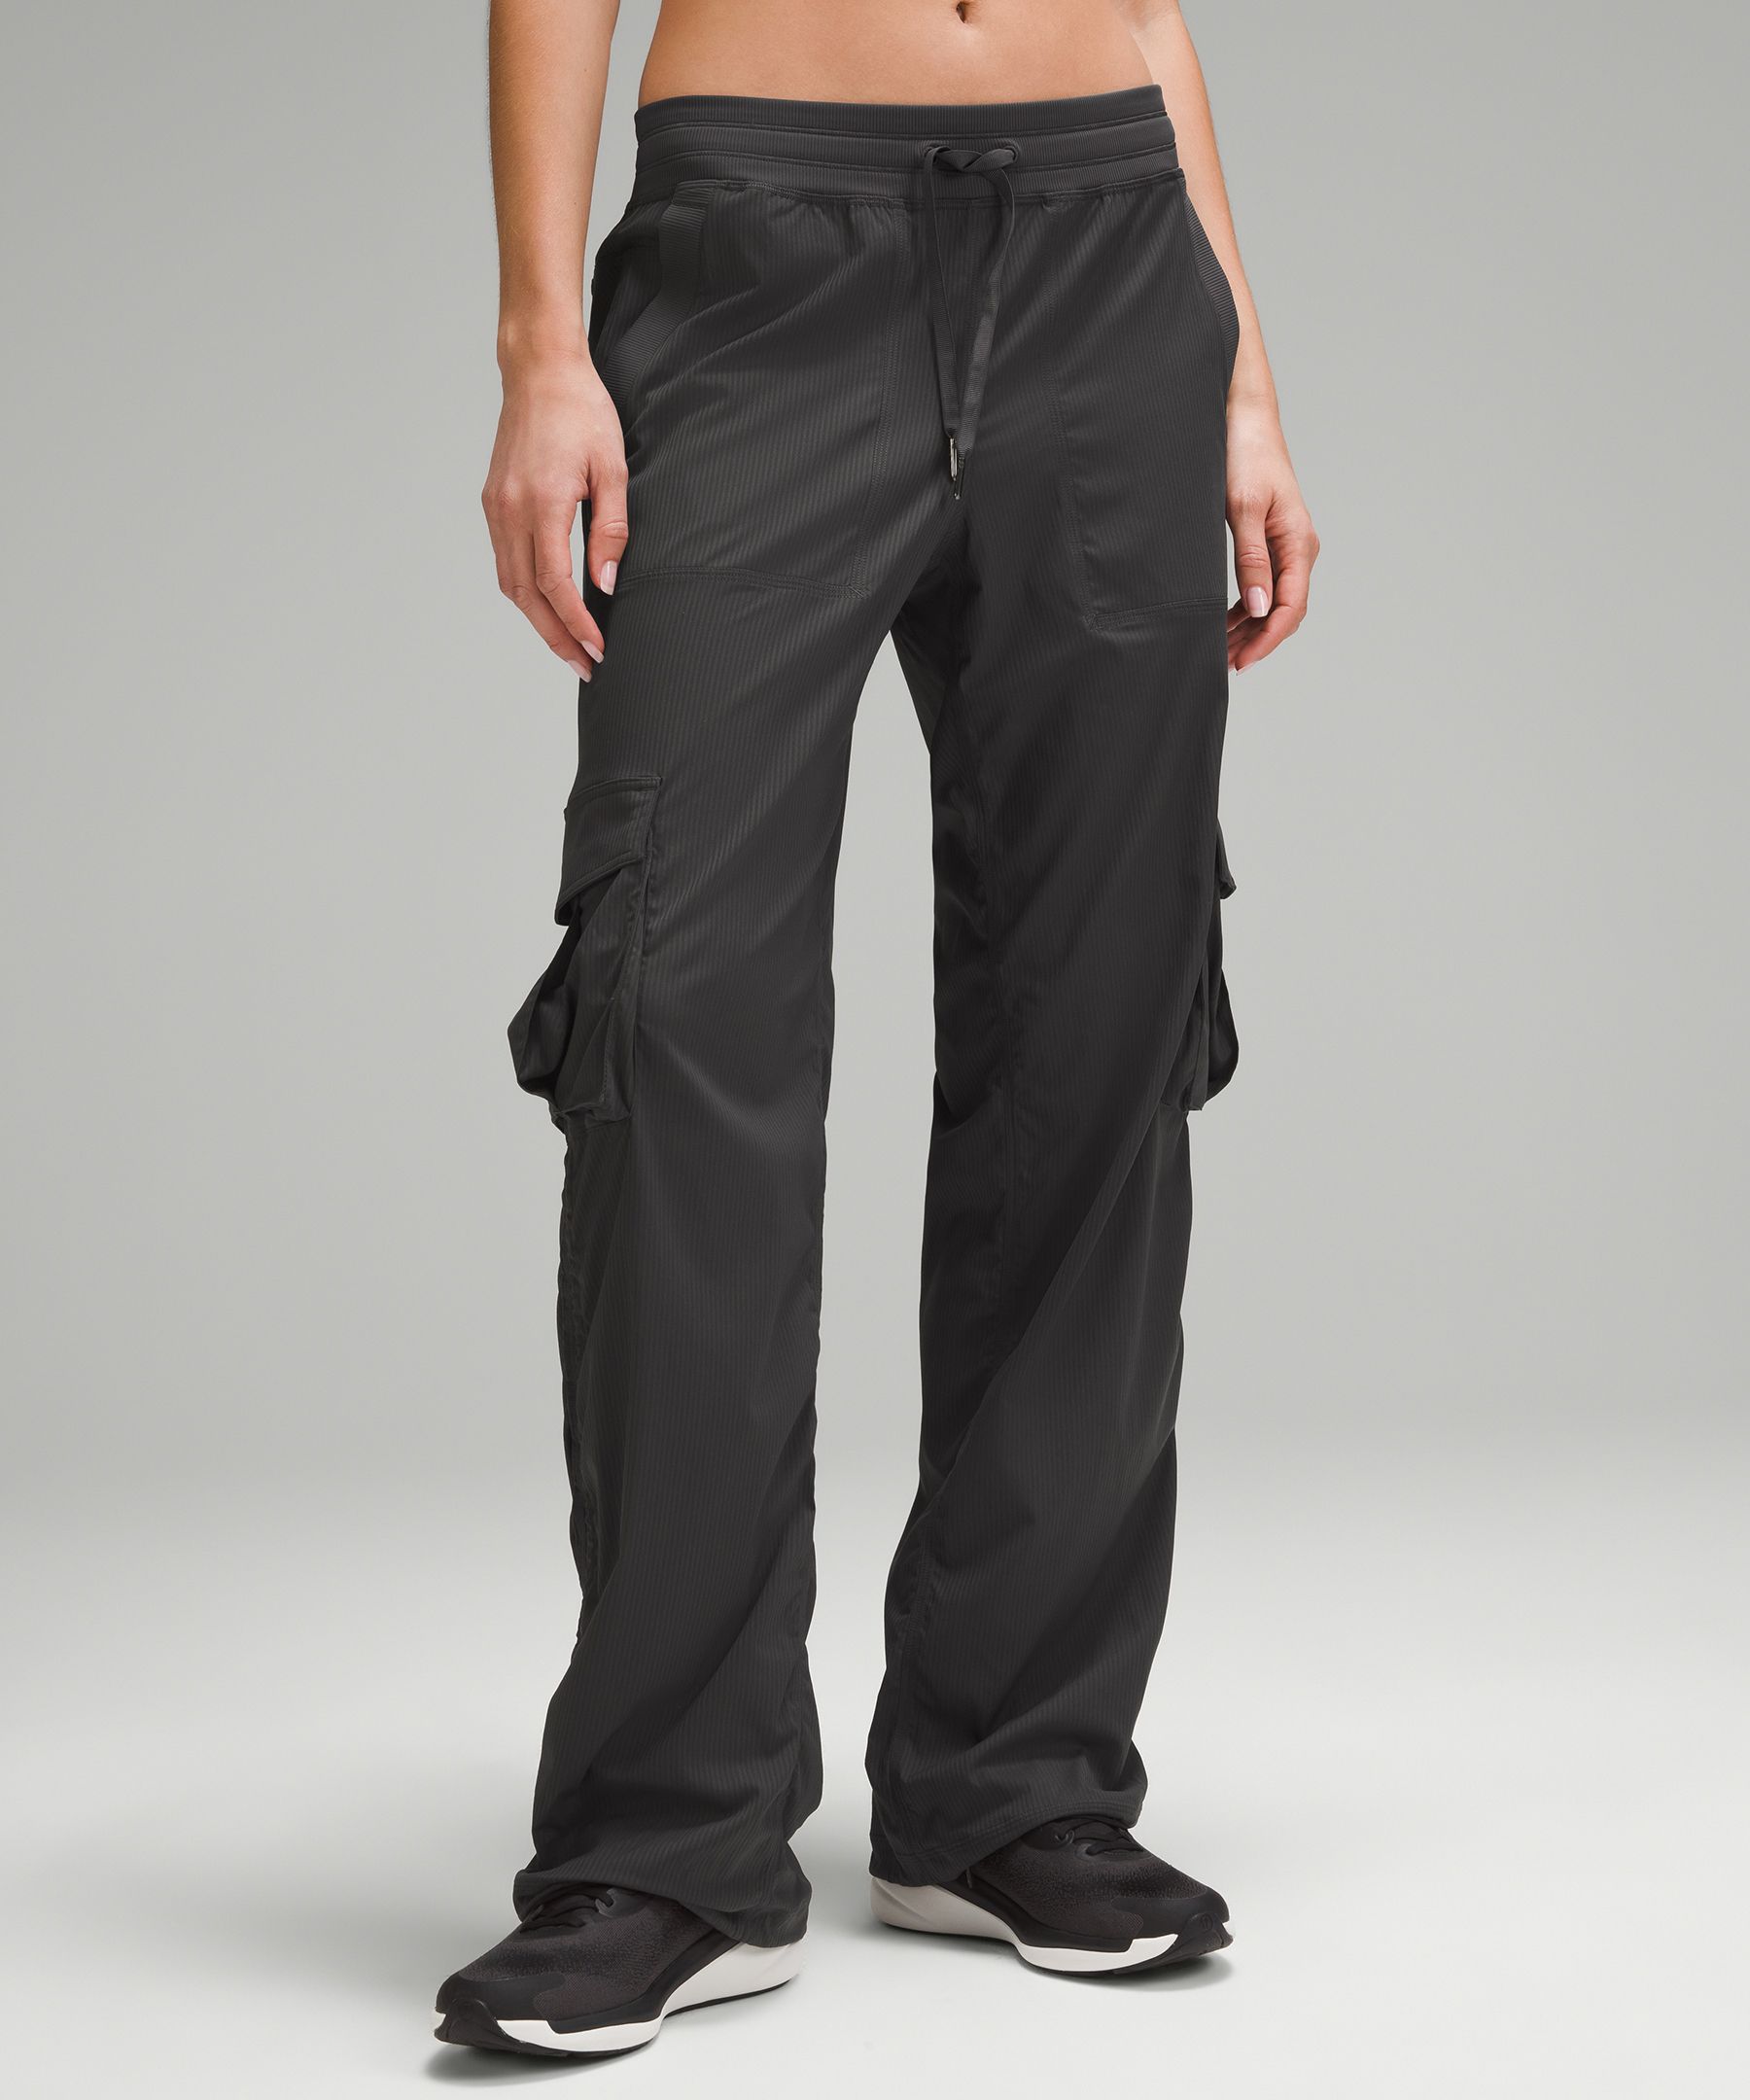 Zumba Fitness Soft-N-Stretch Cargo Pants - Sew Black